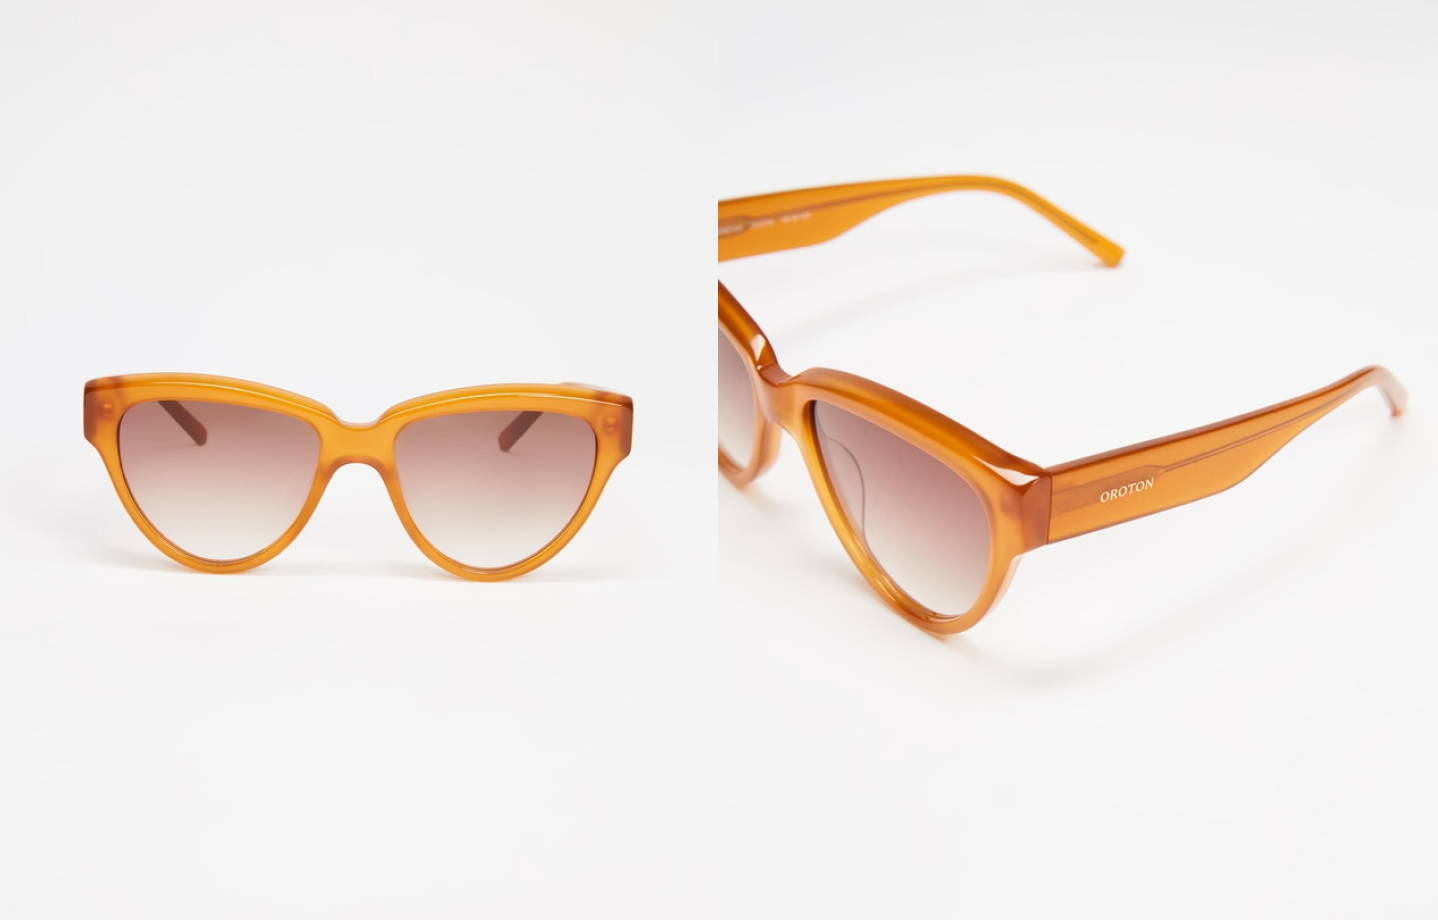 Oroton sunglasses for heart face shapes 